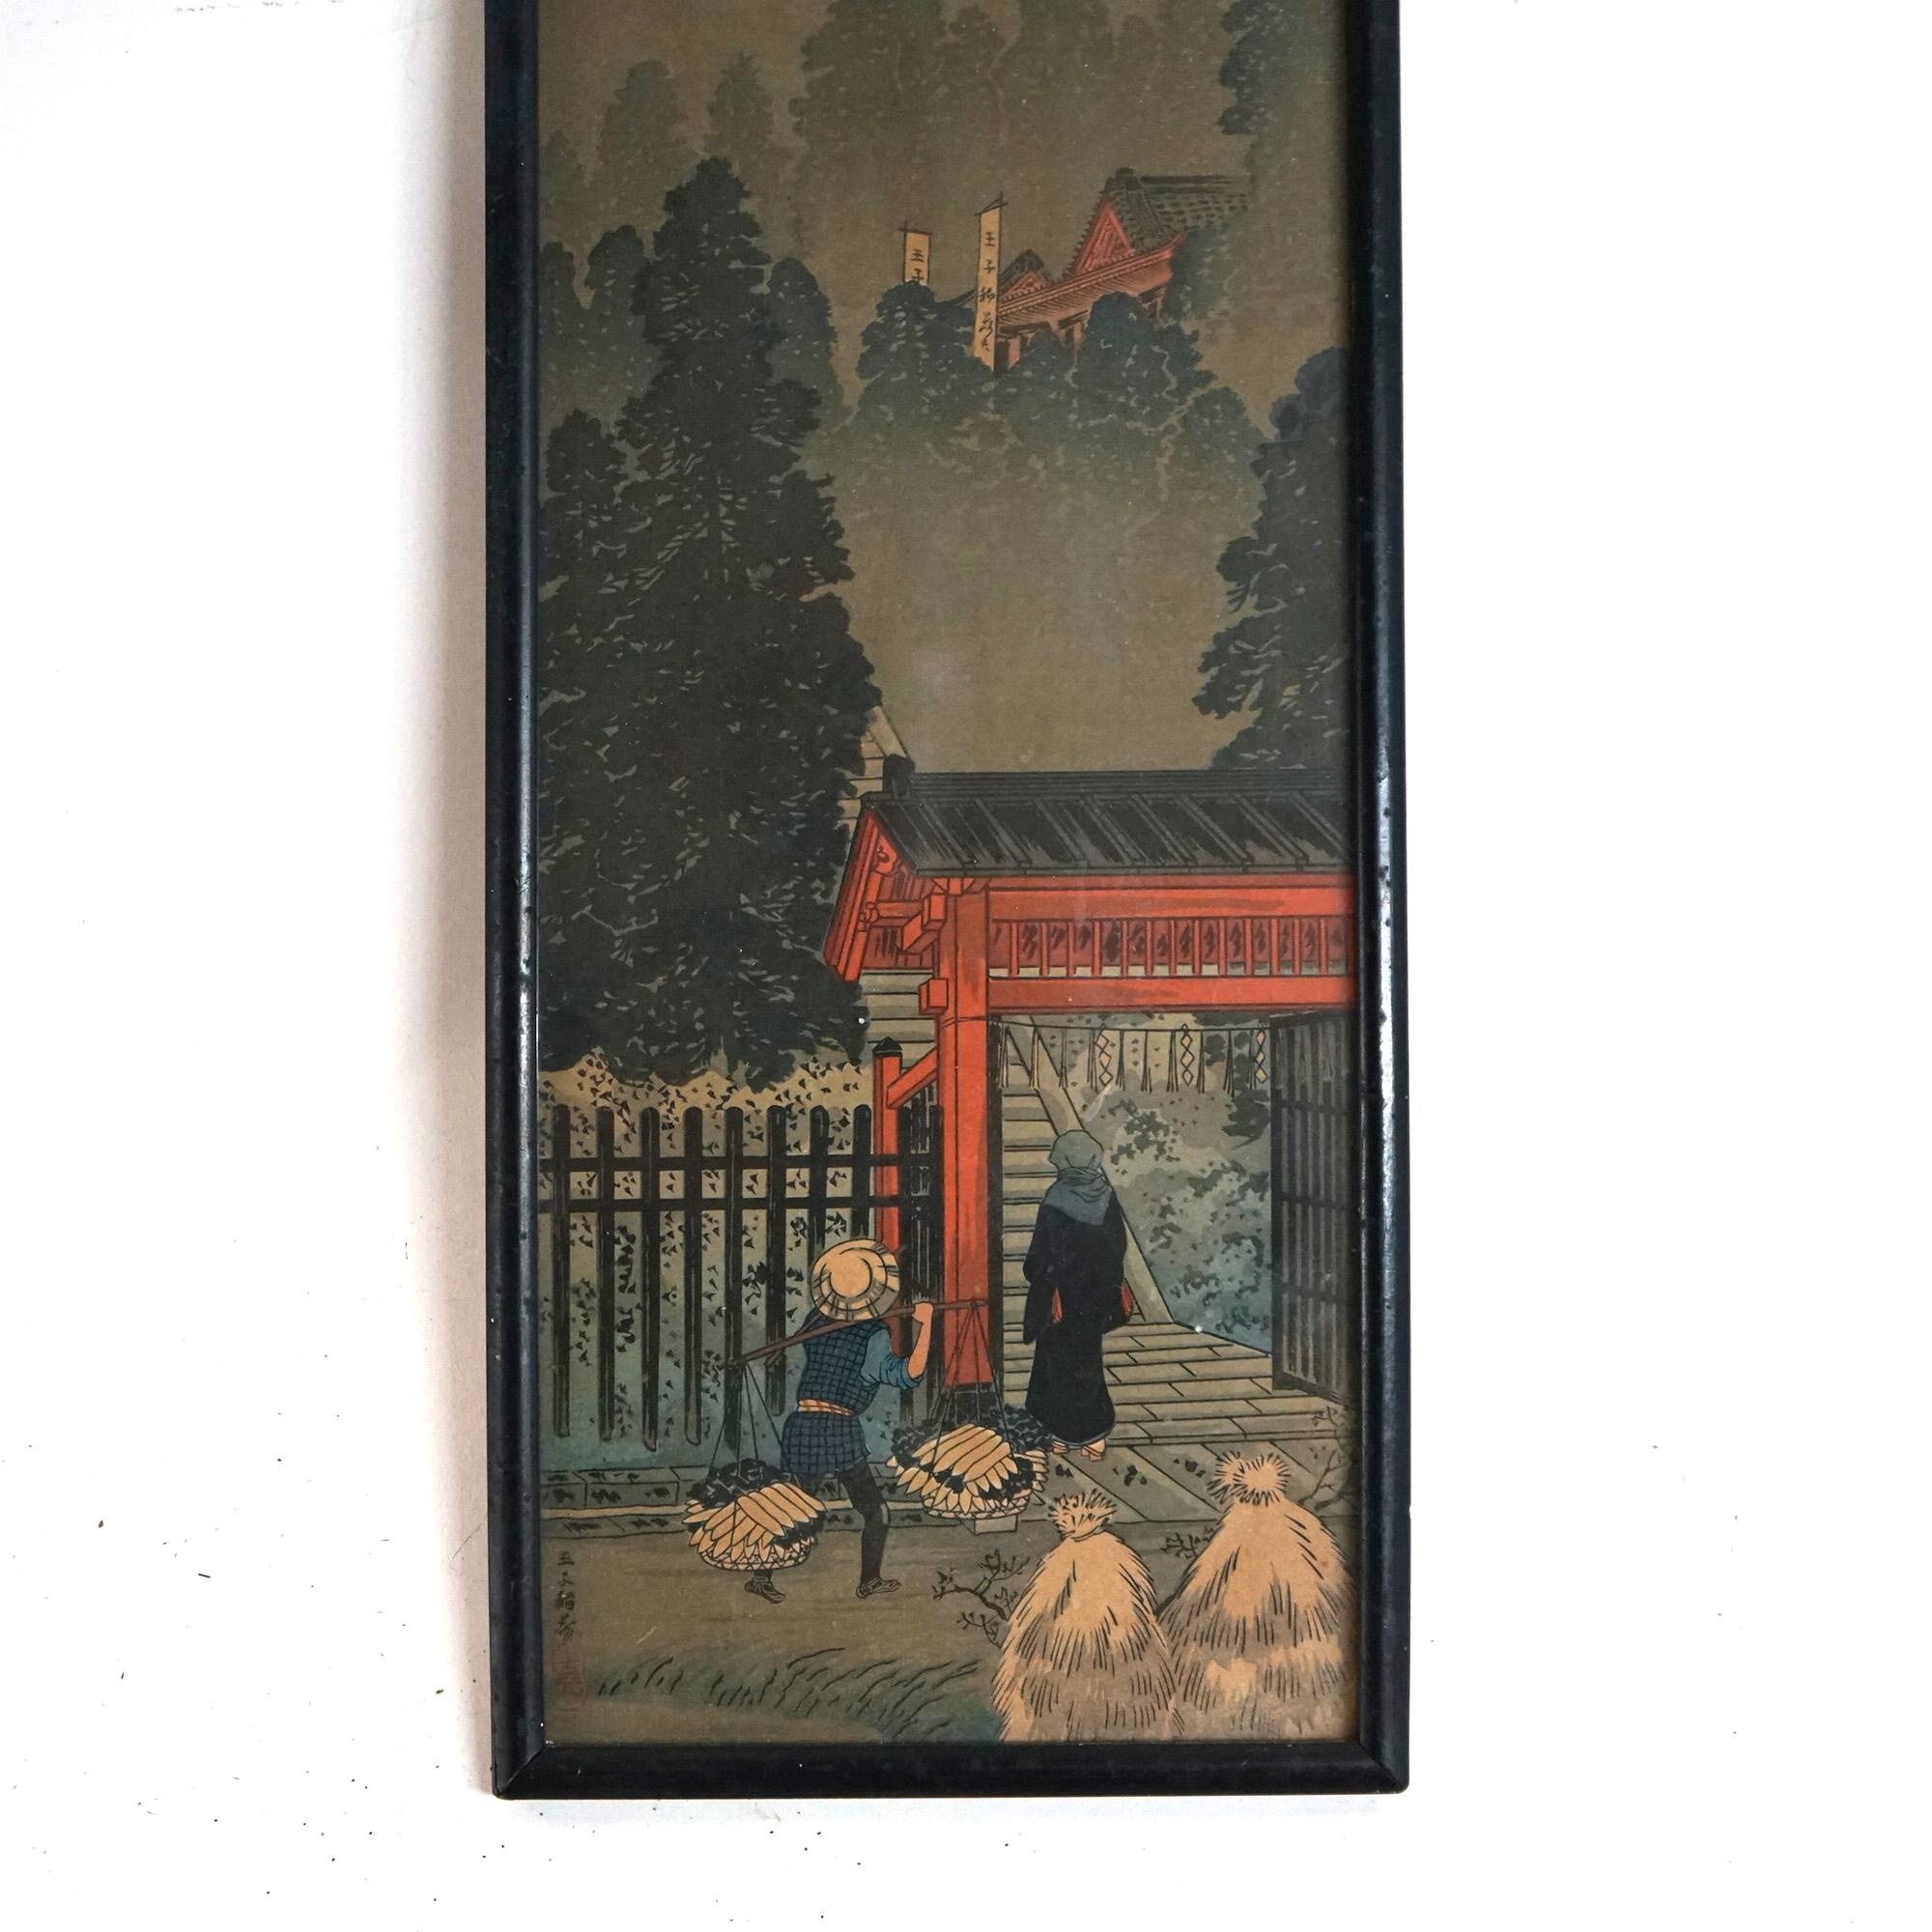 Japanese Woodblock Prints by Utagawa Hiroshige and Hiroaki Takahashi 20thC For Sale 4